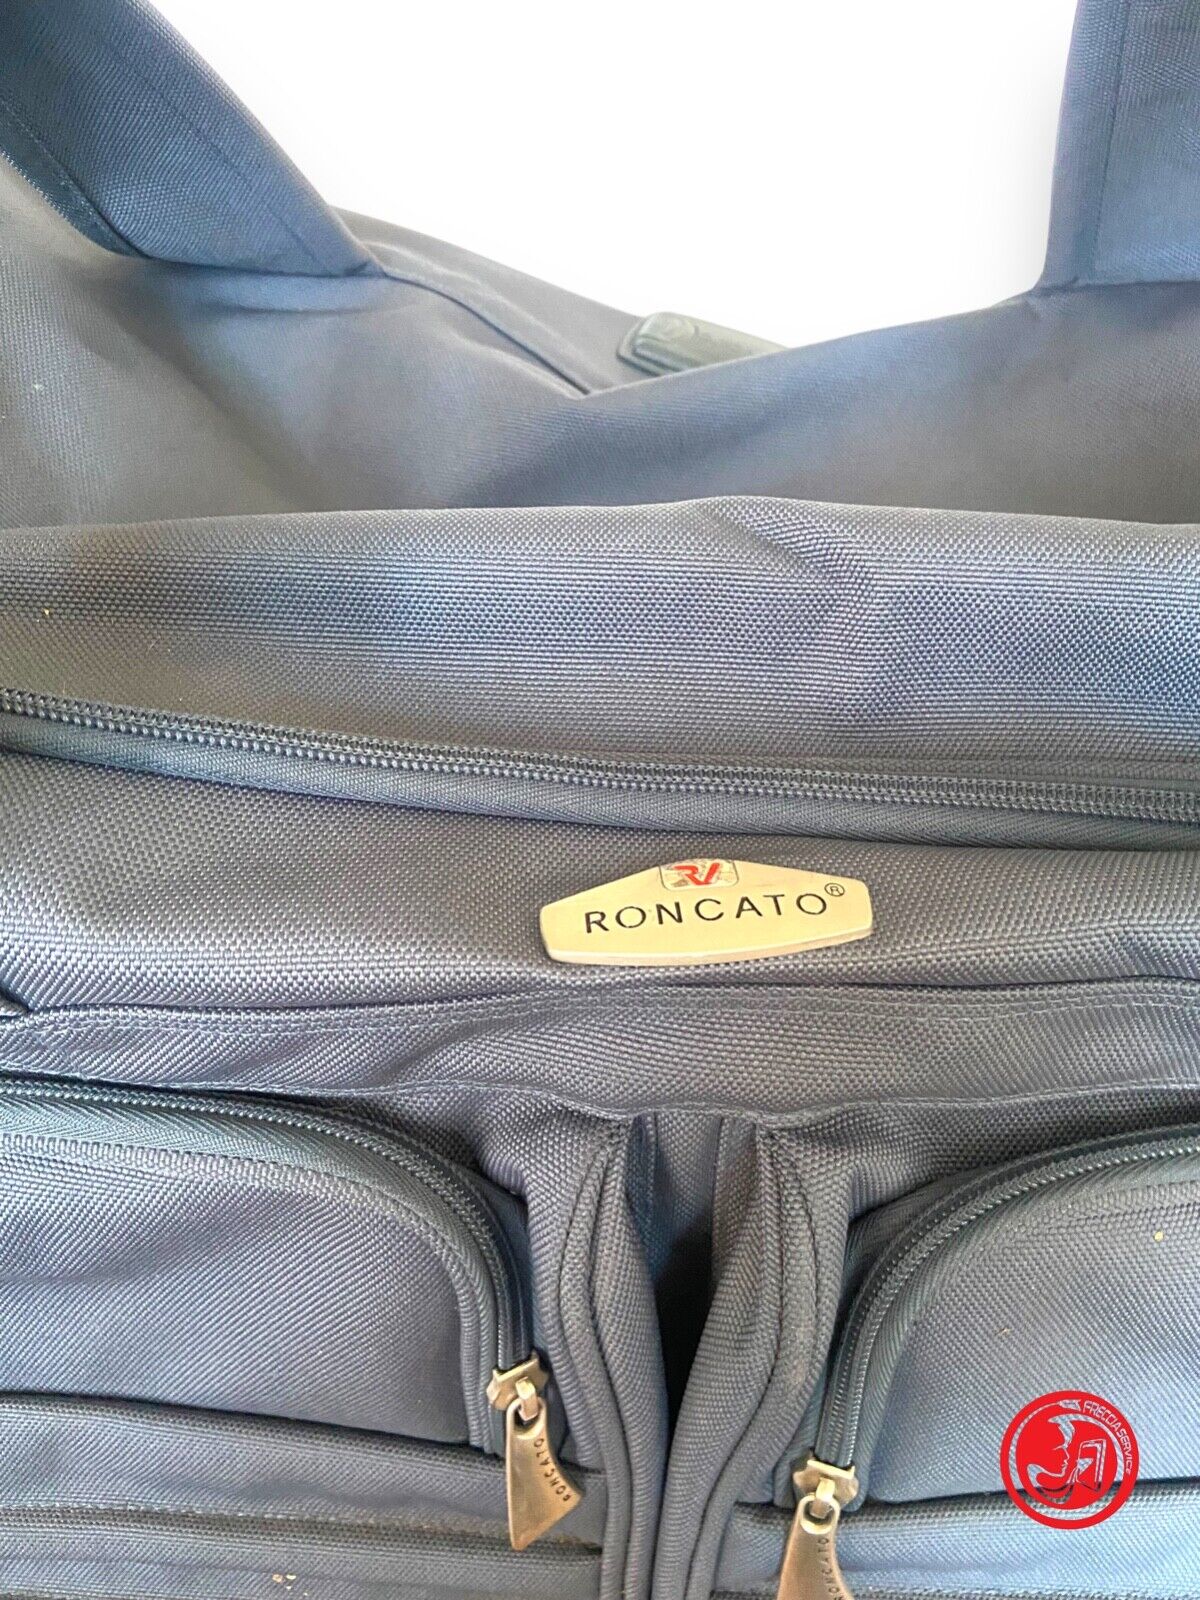 Roncato travel bag 